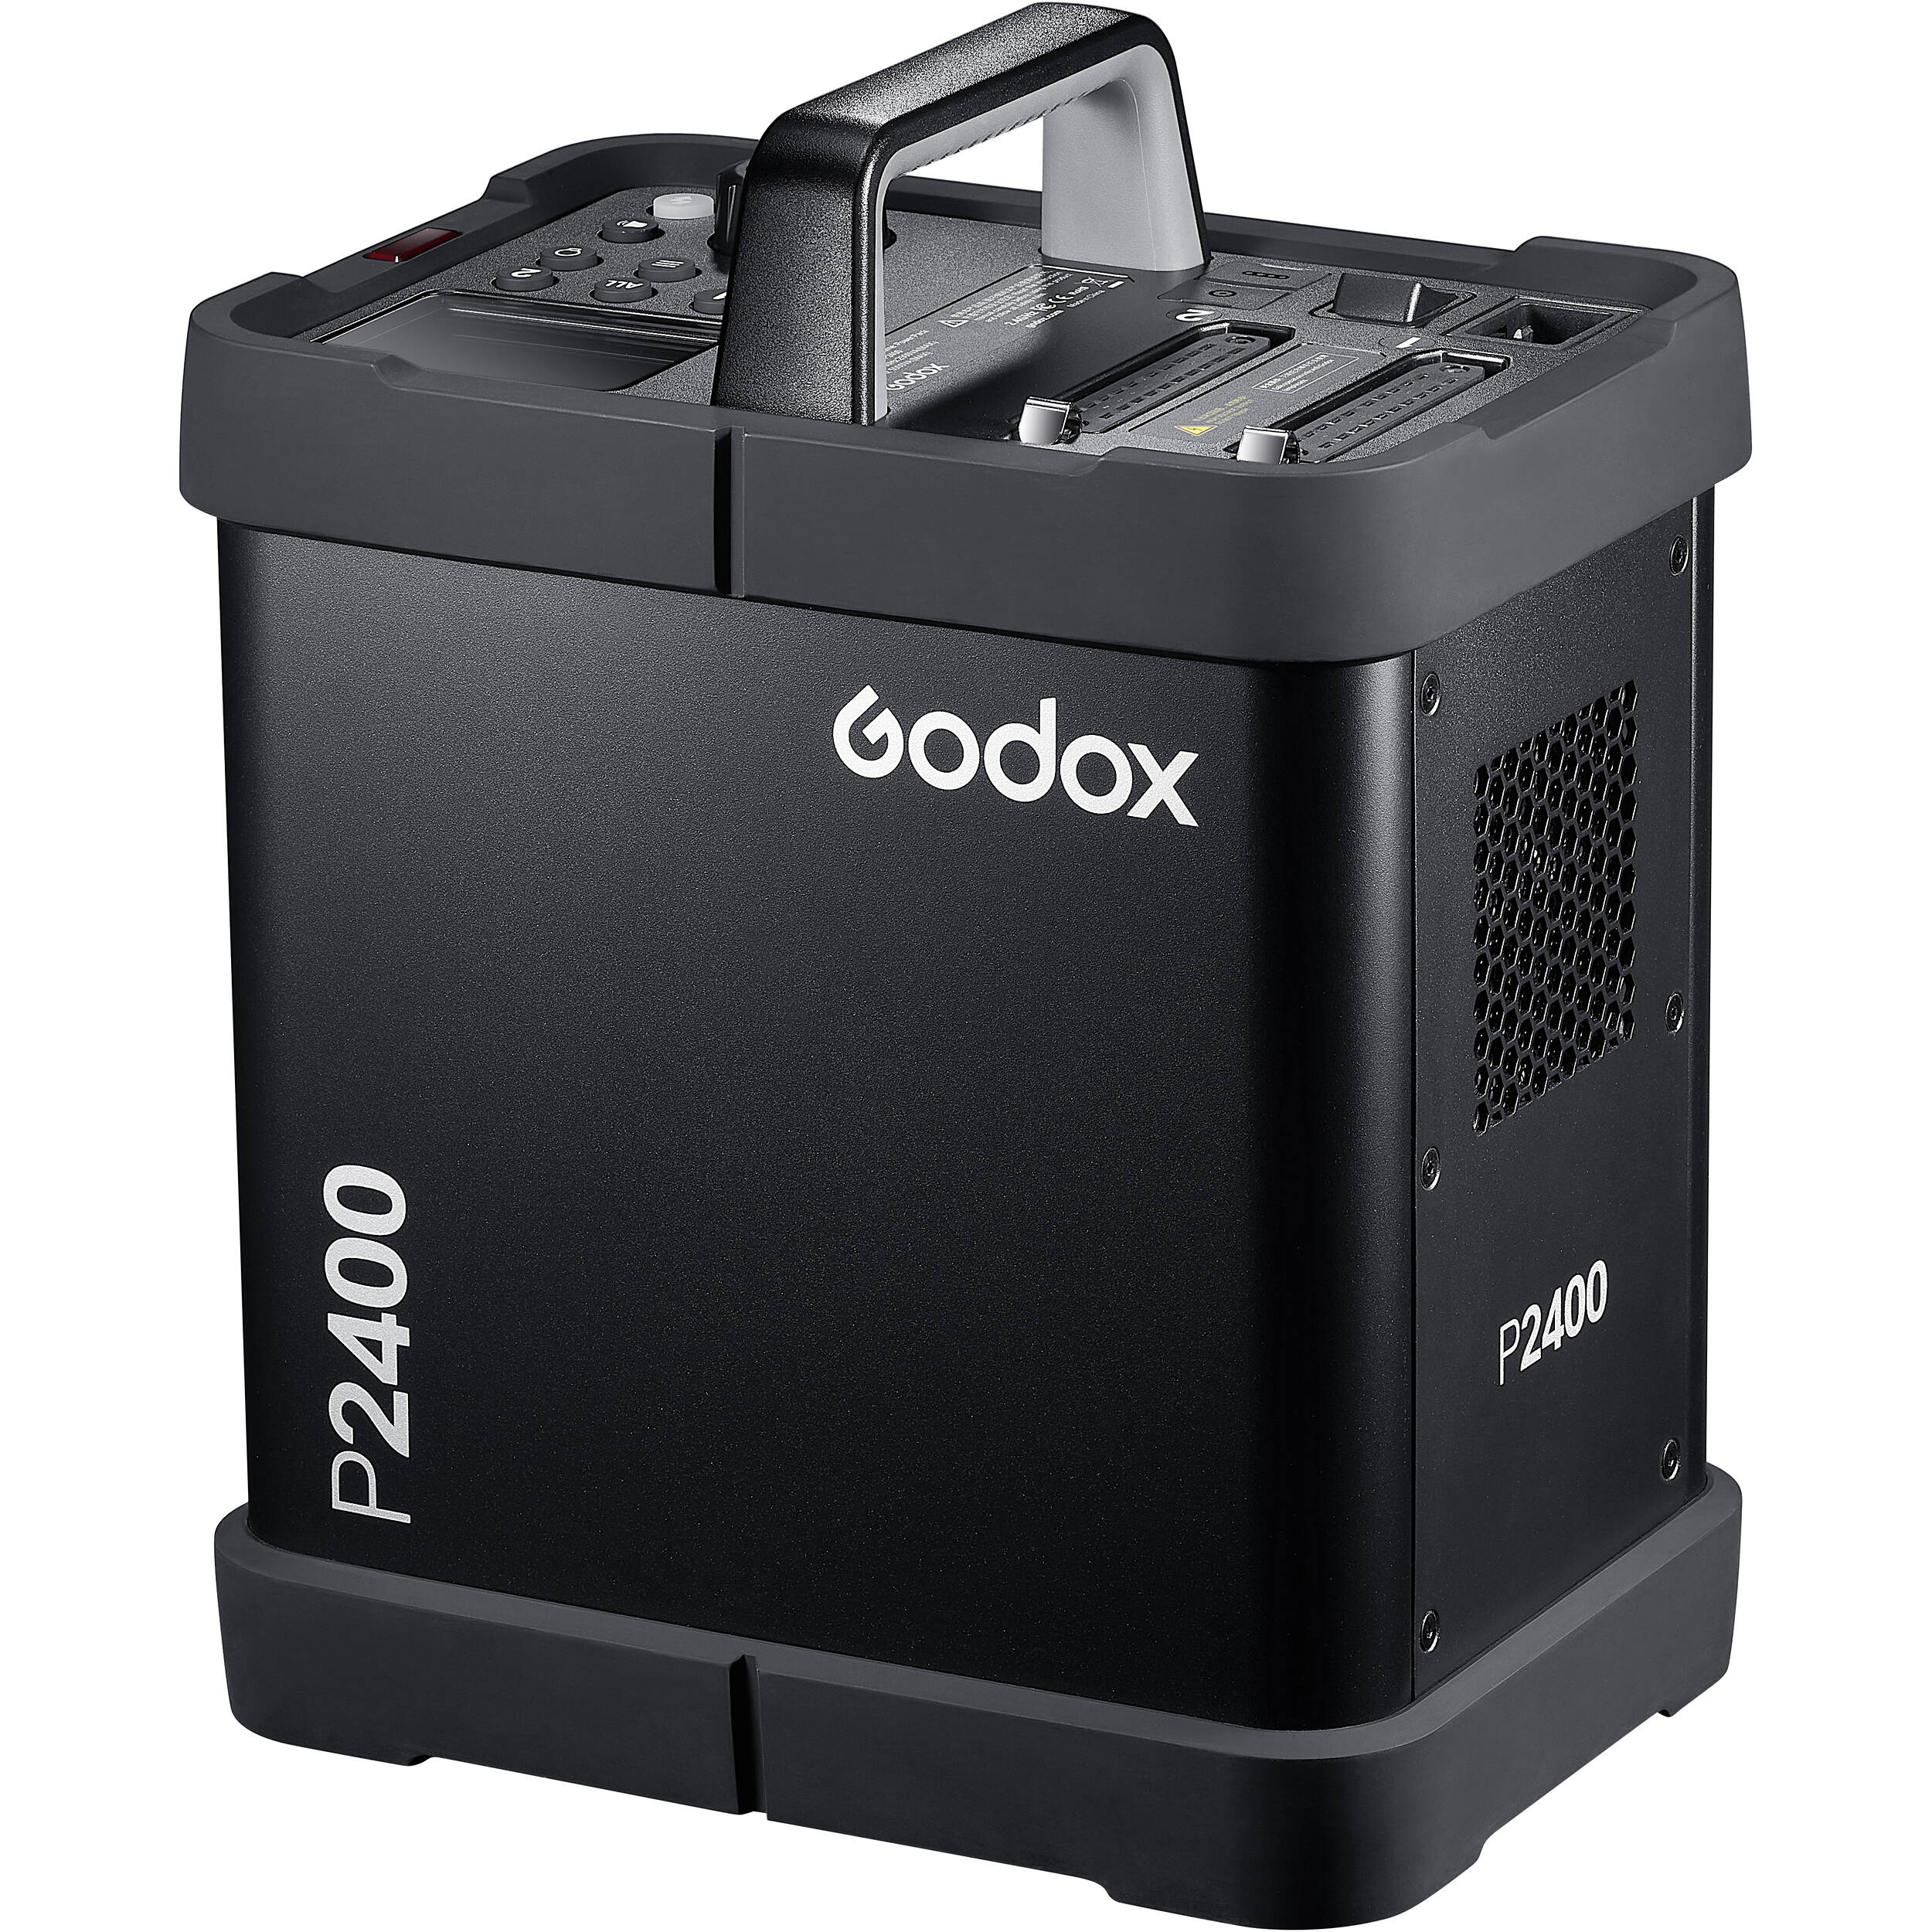    Godox P2400   Ultra-mart